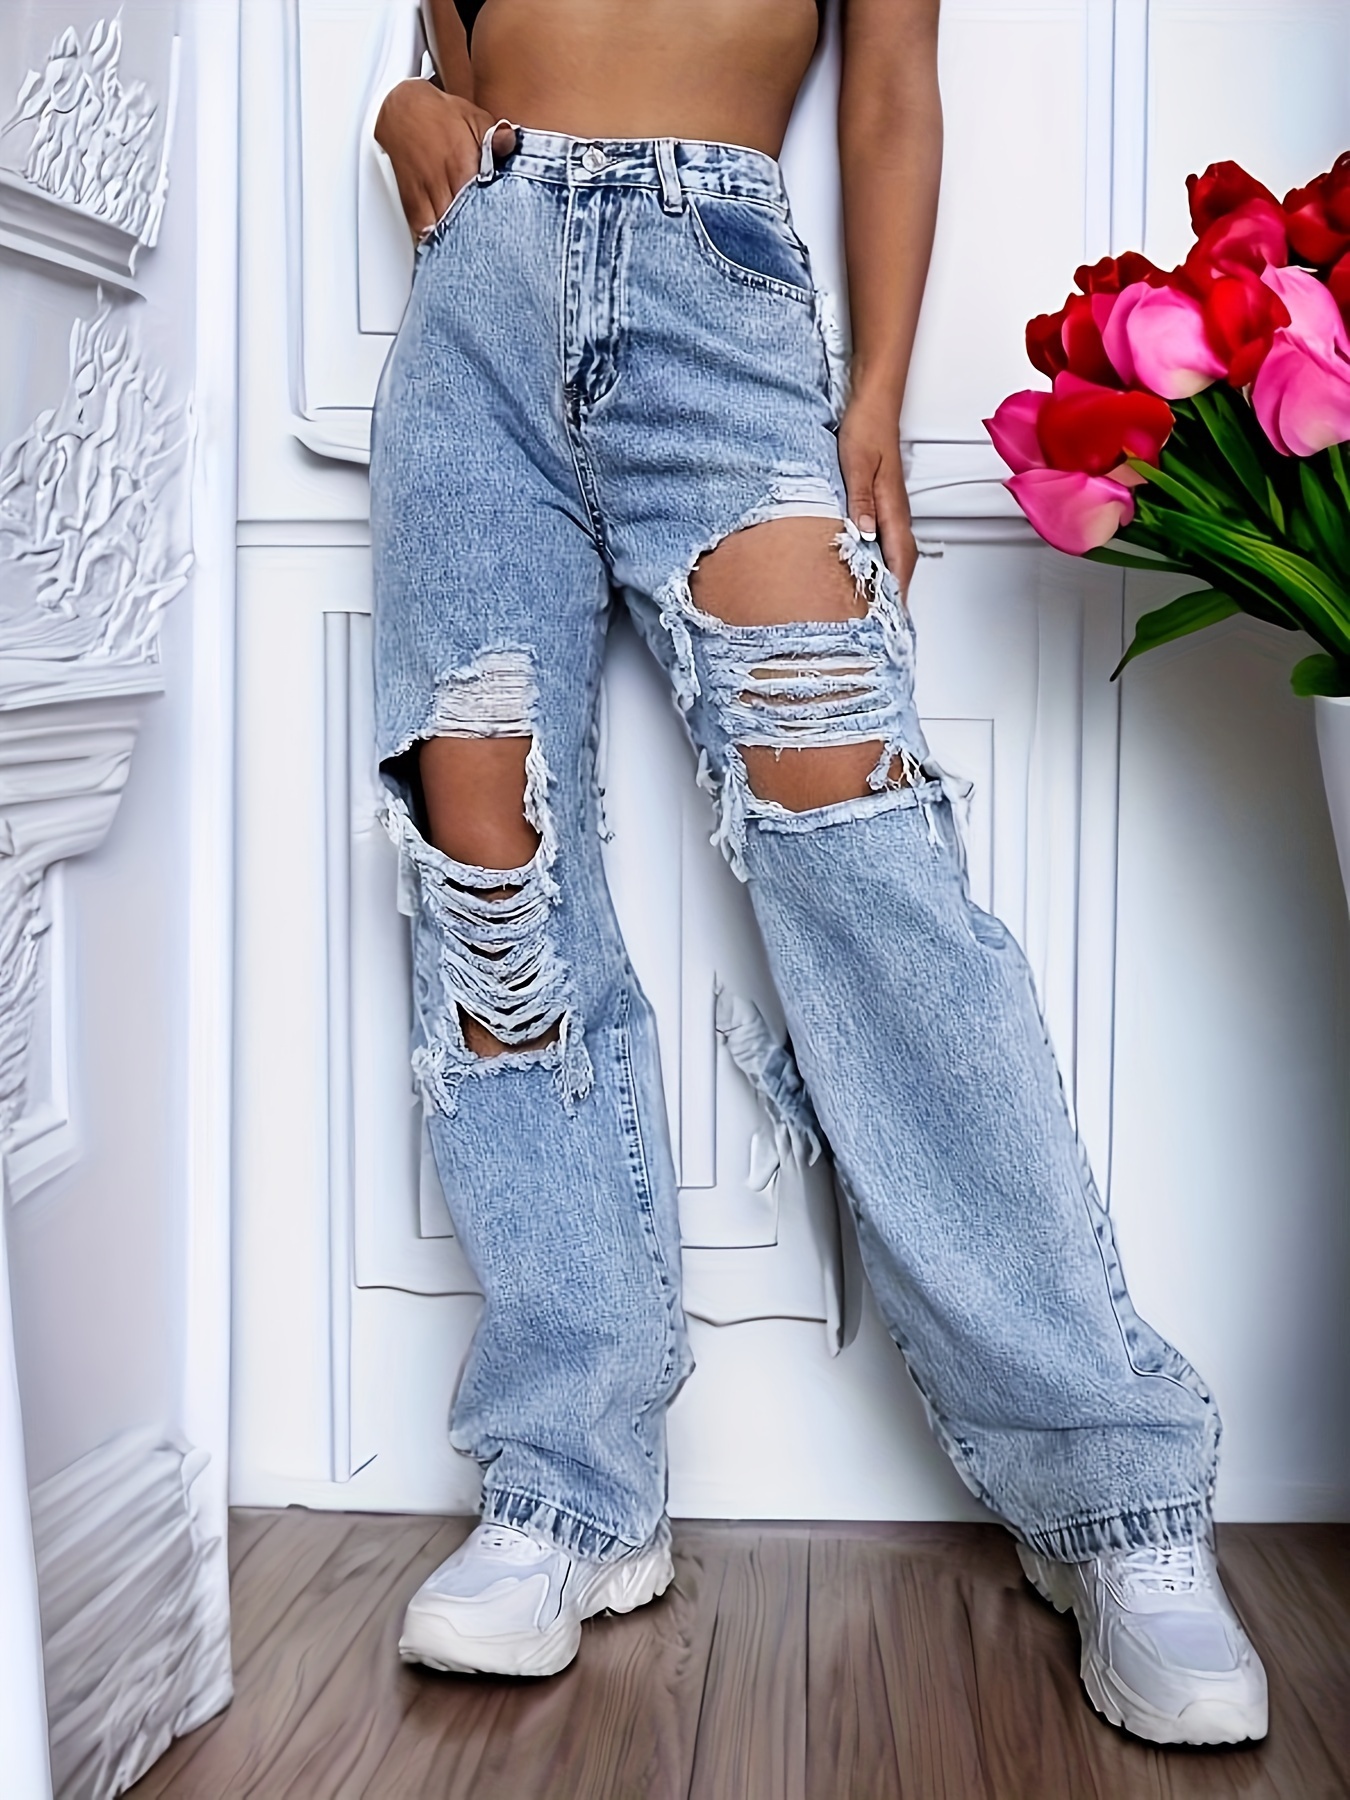 Women's Jeans - Denim Clothing